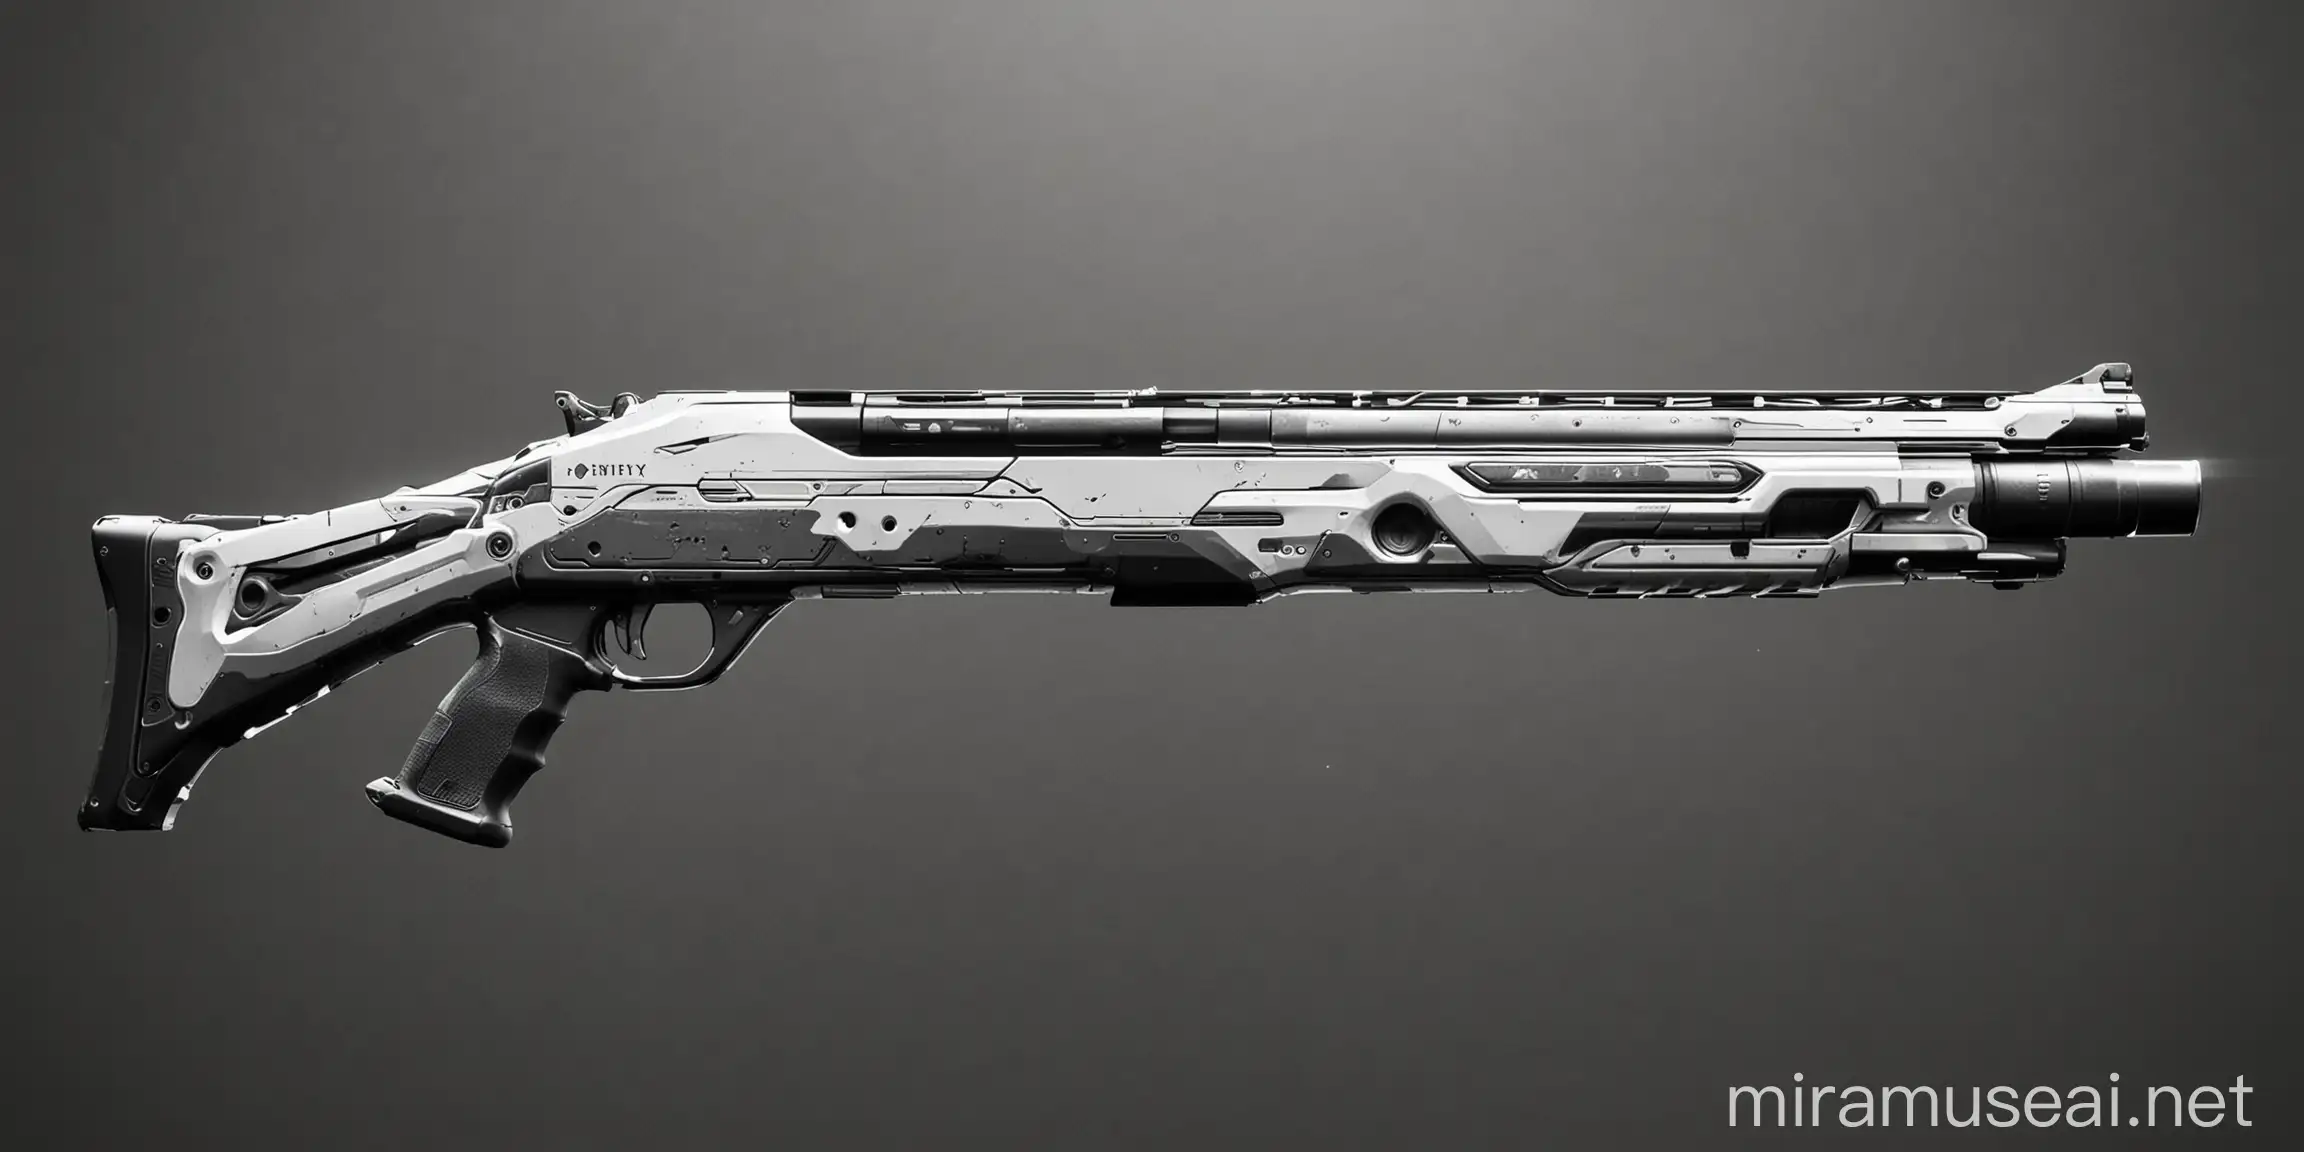 destiny 2 shotgun, black and white colors, futuristic